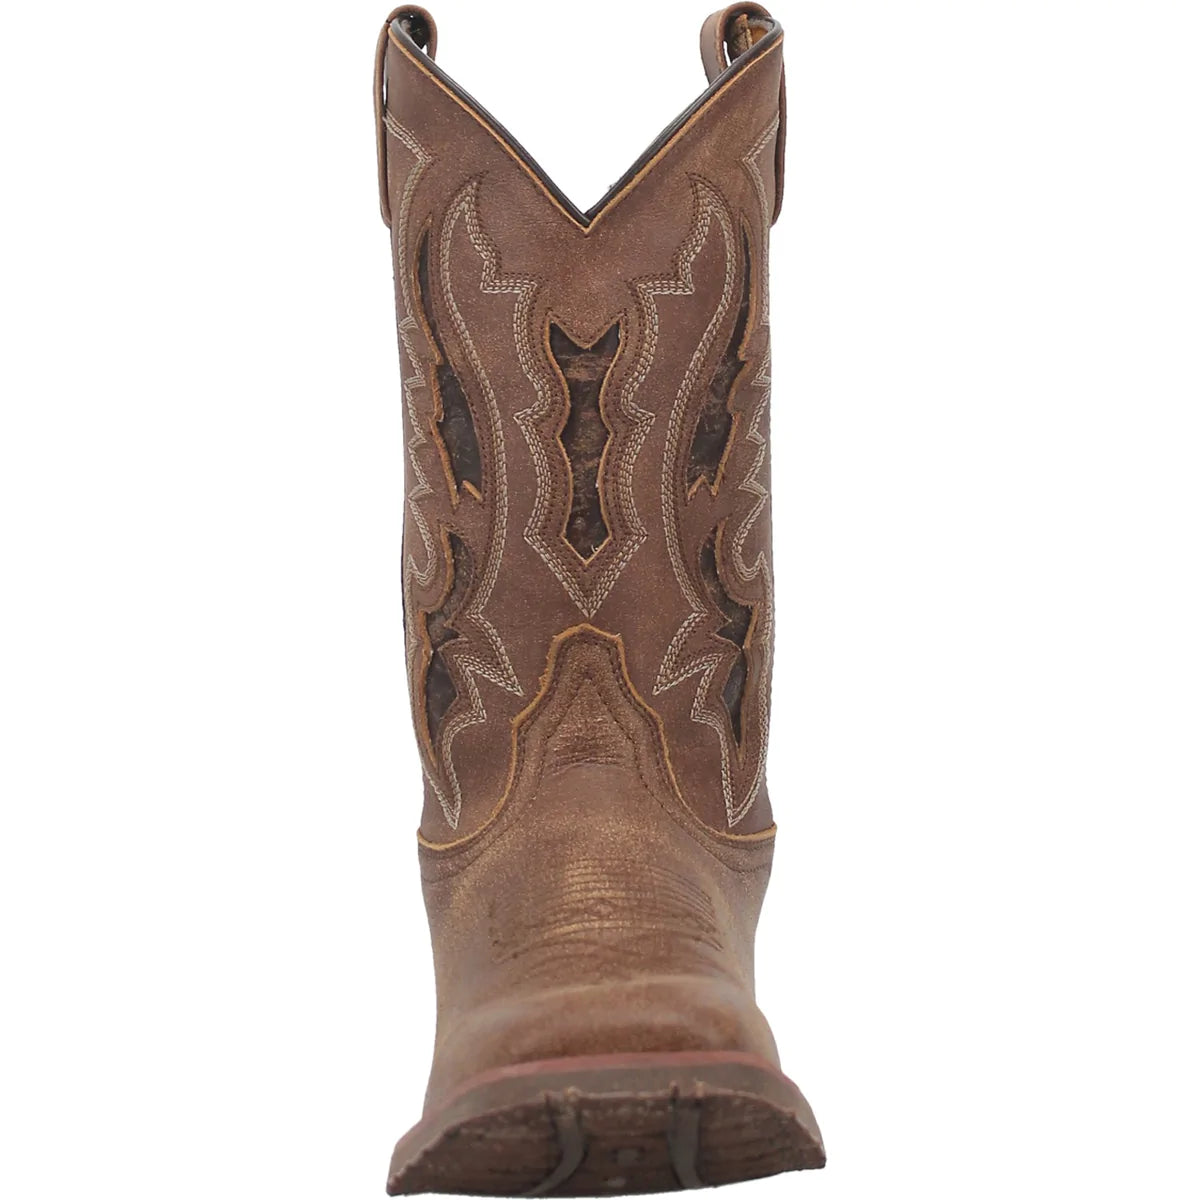 Laredo Martin Leather Boot - Nate's Western Wear